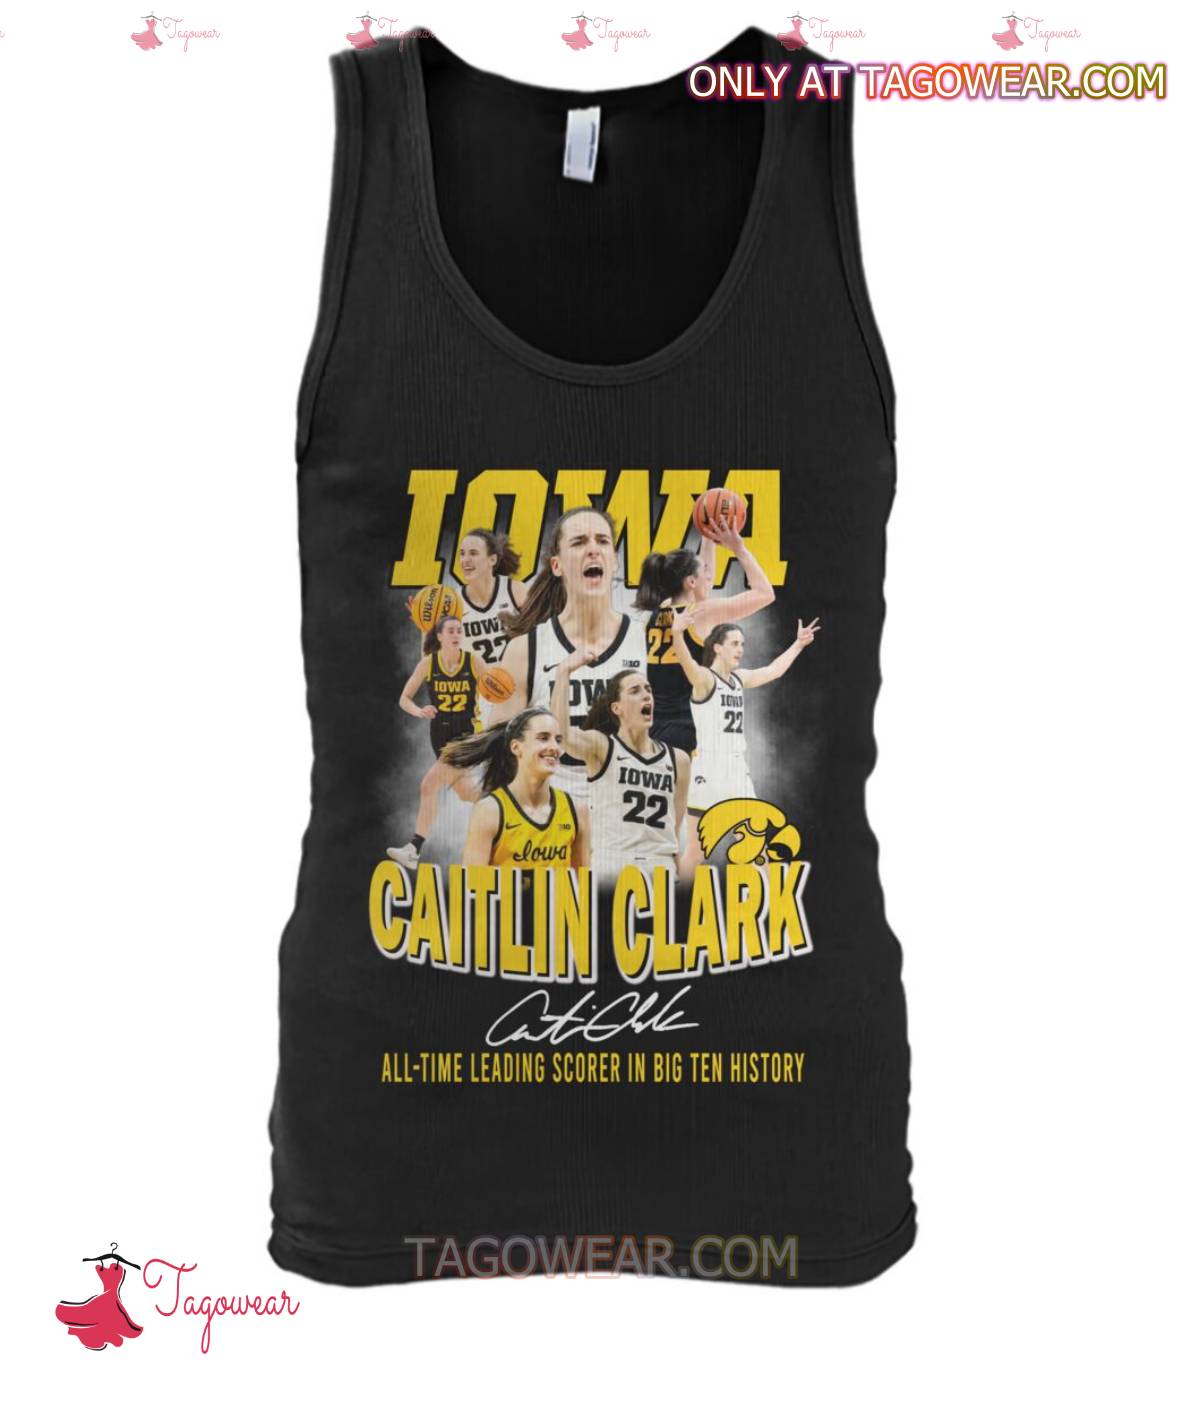 Iowa Caitlin Clark Signature All-time Leading Scorer In Big Ten History Shirt x